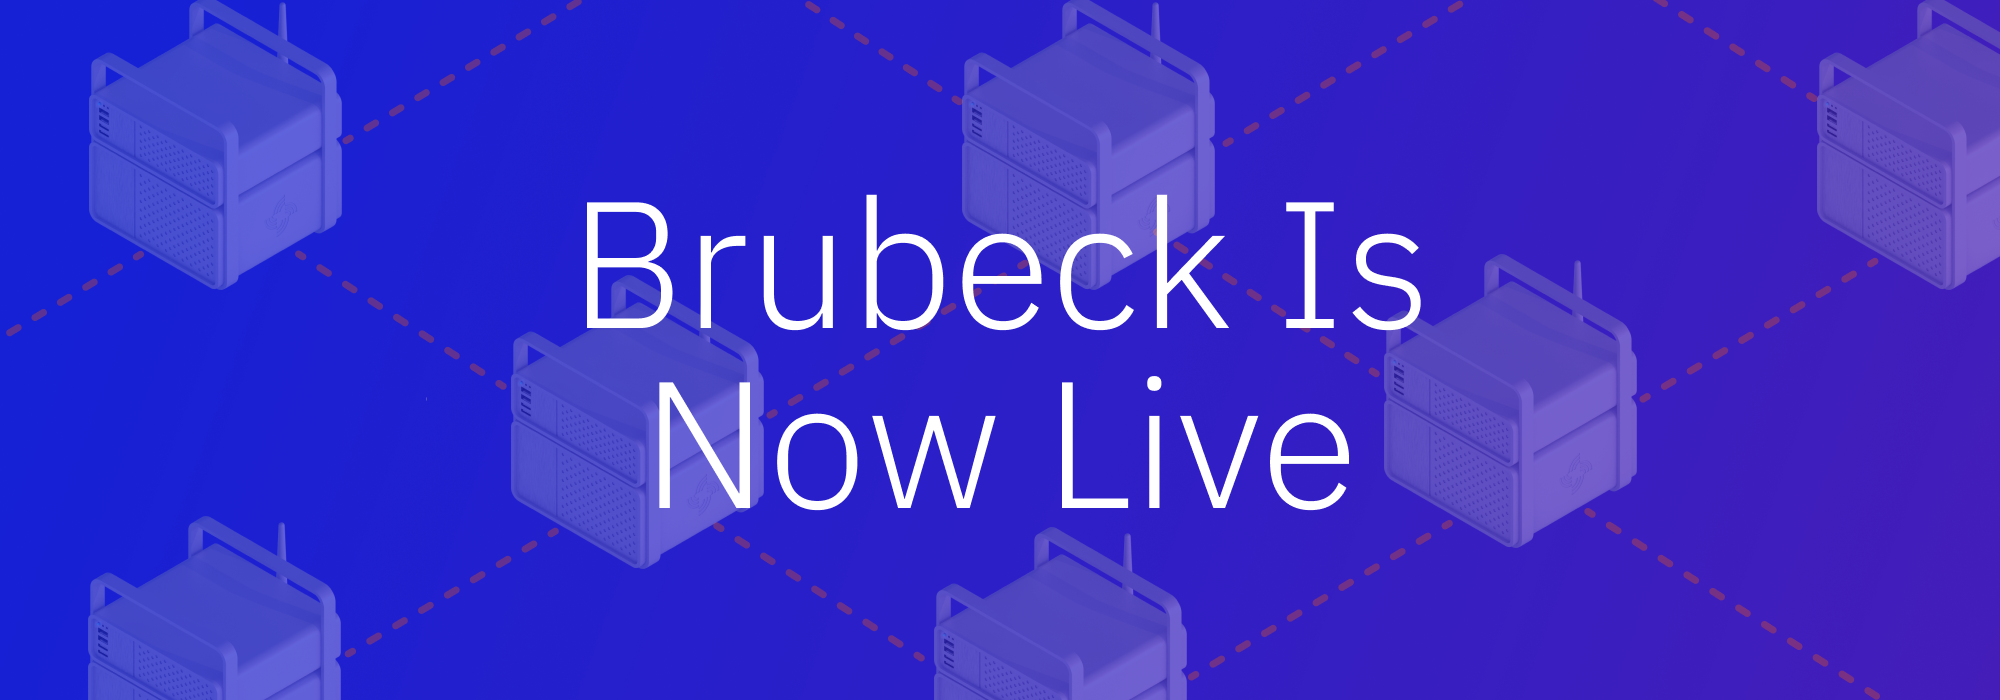 Brubeck mainnet and staking rewards go live!